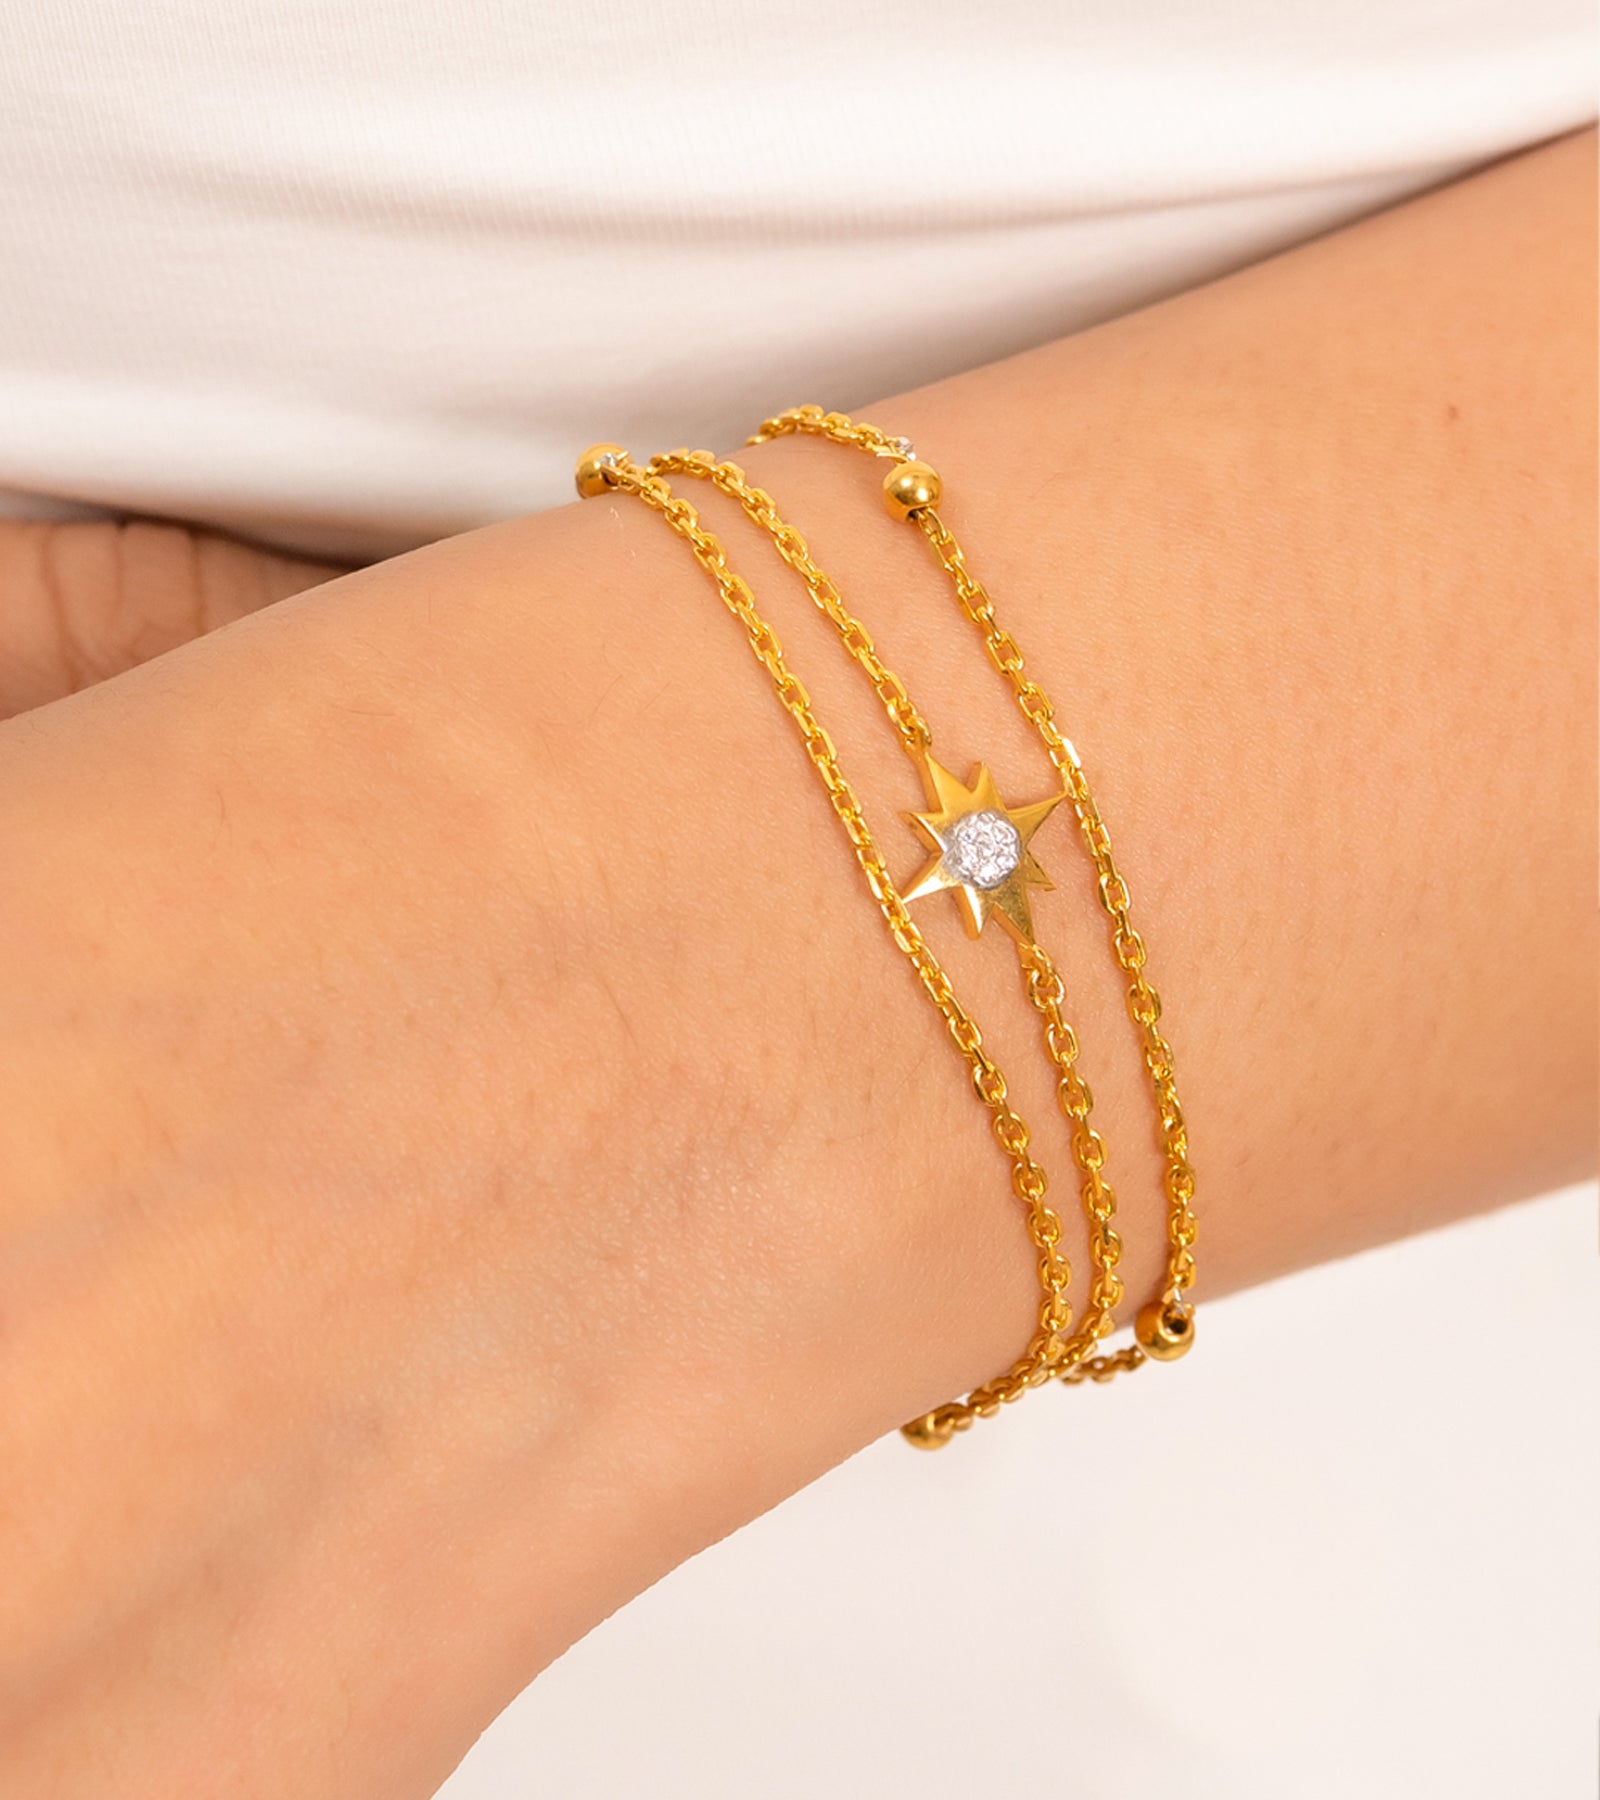 Gold Style Bracelets by UNCUT Jewelry